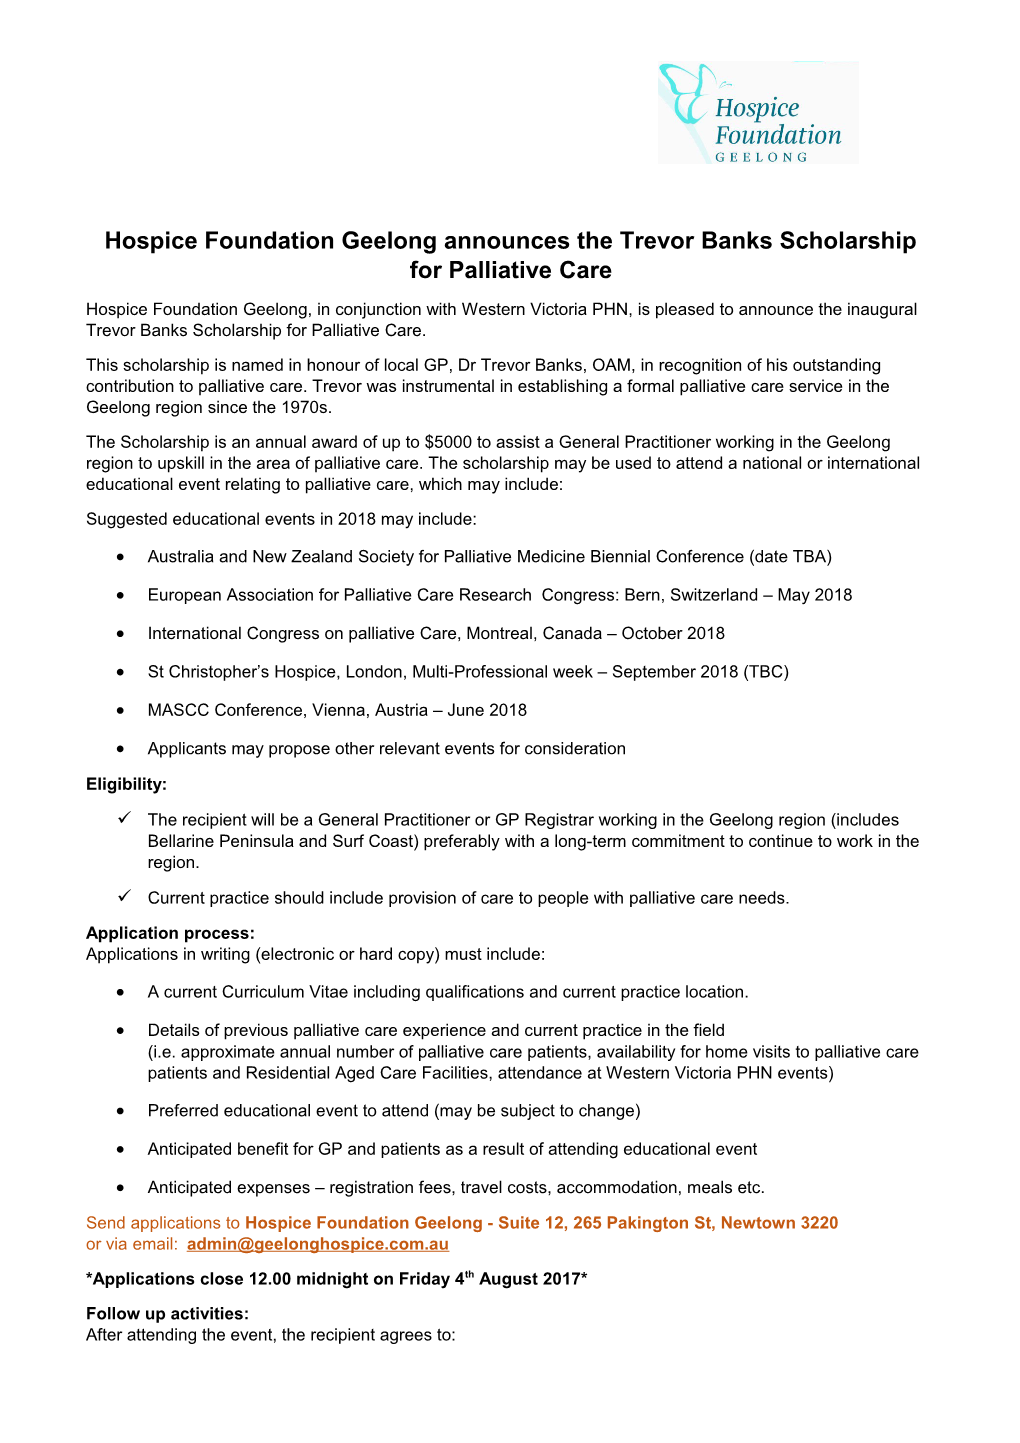 Hospice Foundation Geelong Announces the Trevor Banks Scholarship for Palliative Care